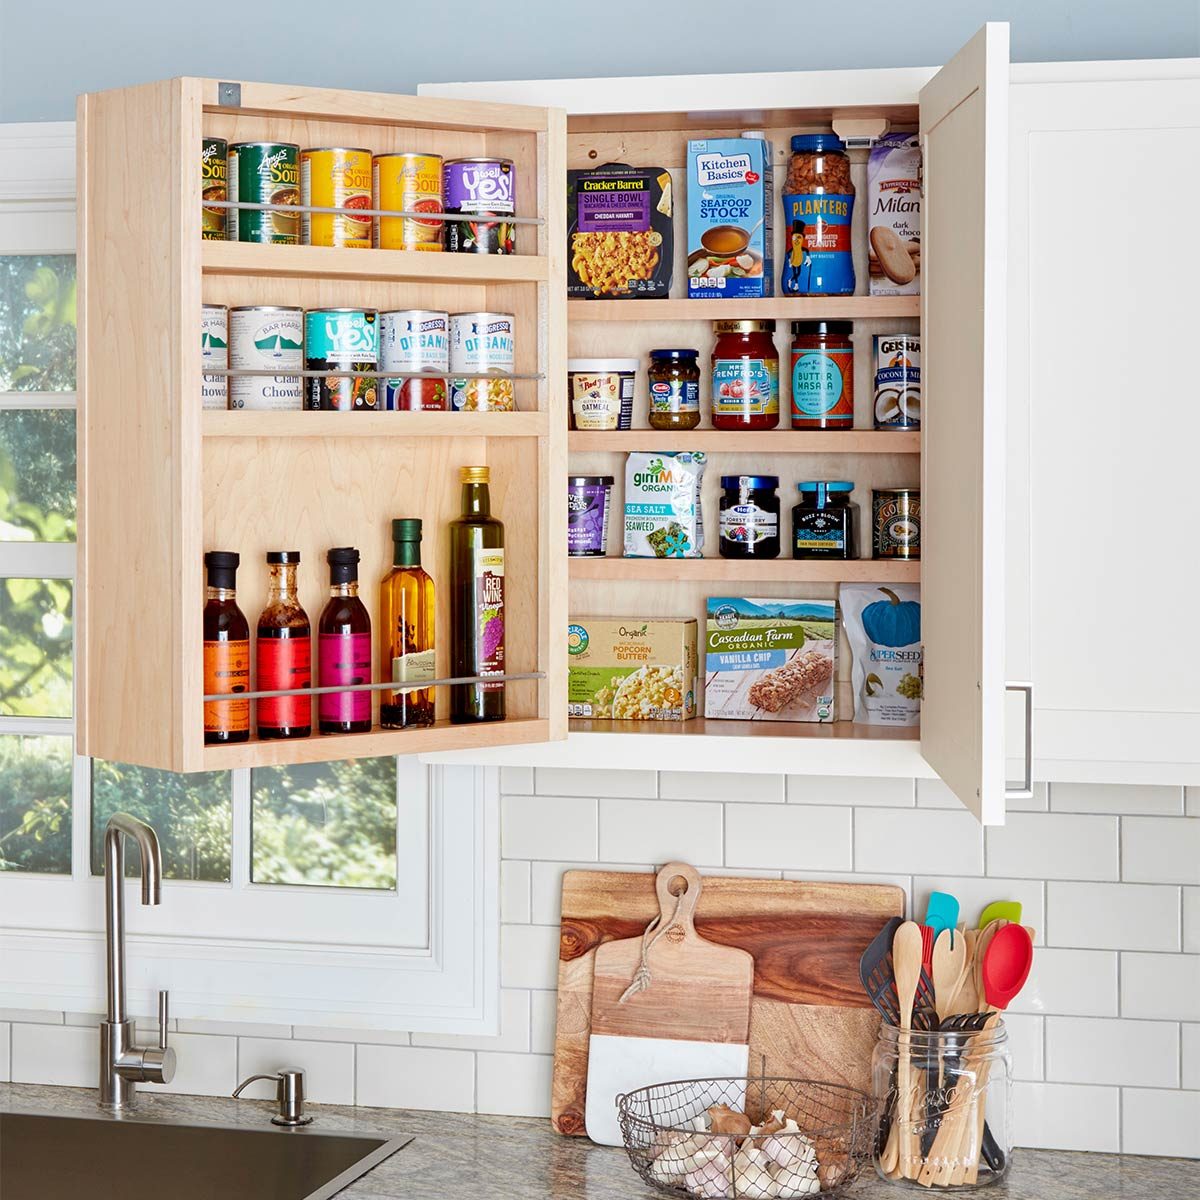 https://www.familyhandyman.com/wp-content/uploads/2019/01/swing-out-kitchen-cabinet.jpg?fit=696%2C696